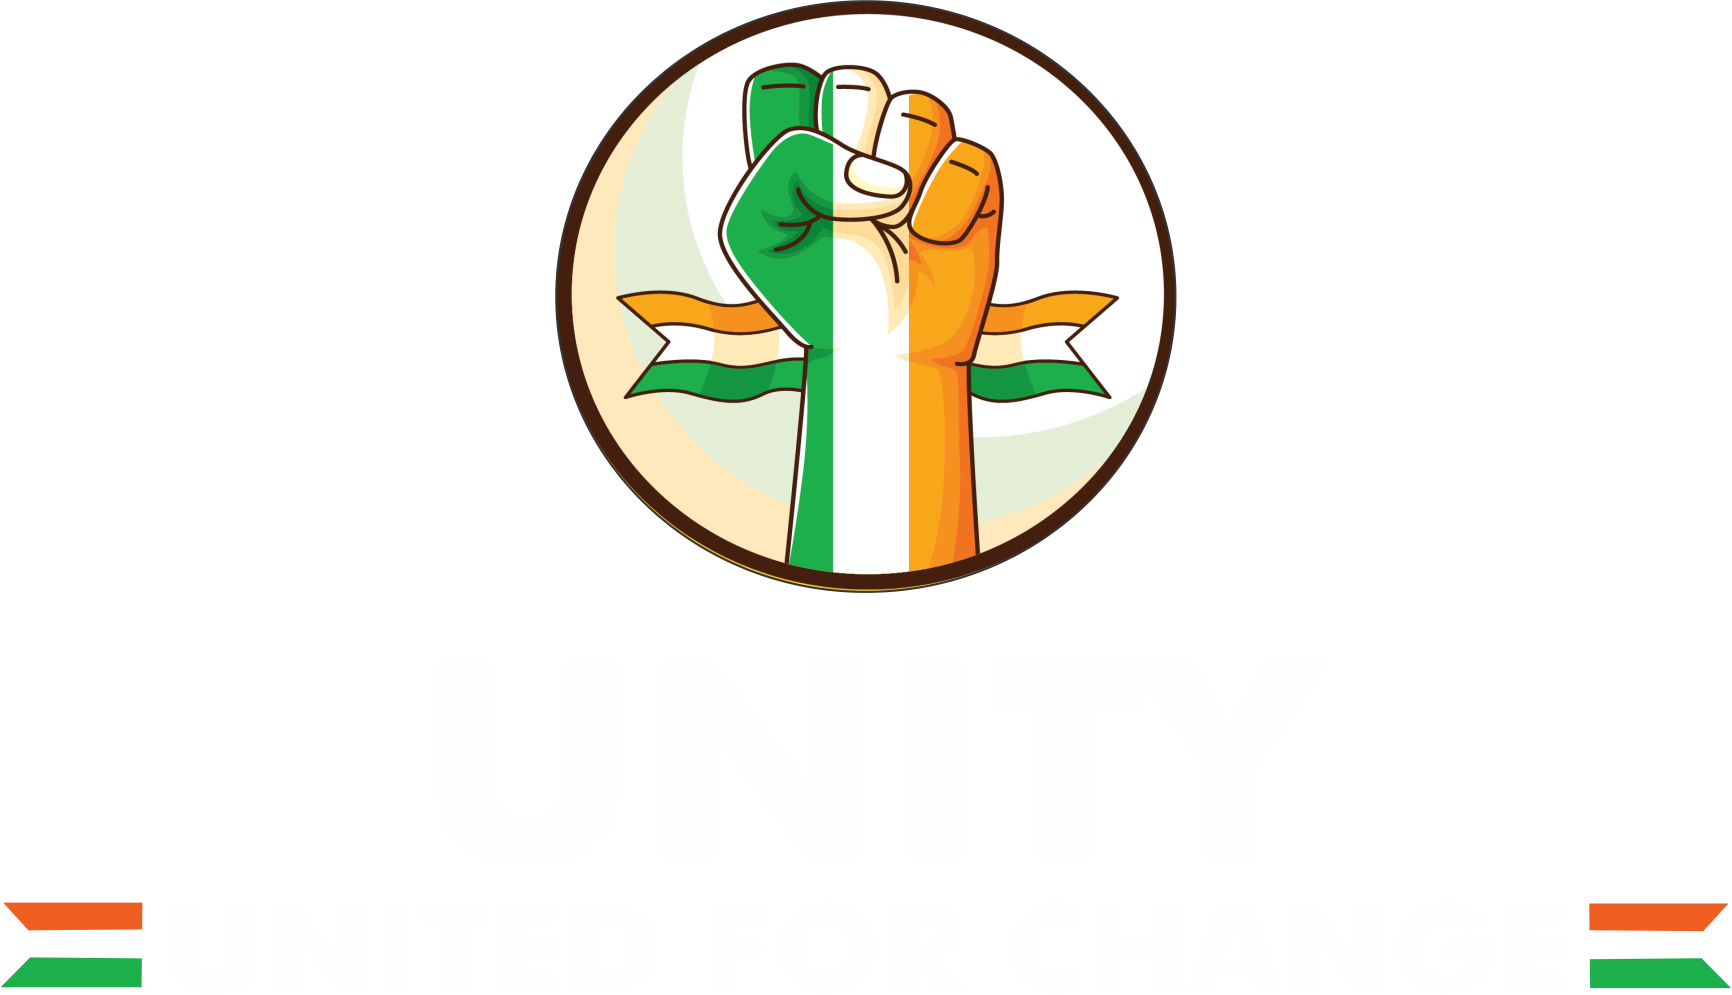 Unity - United For Change